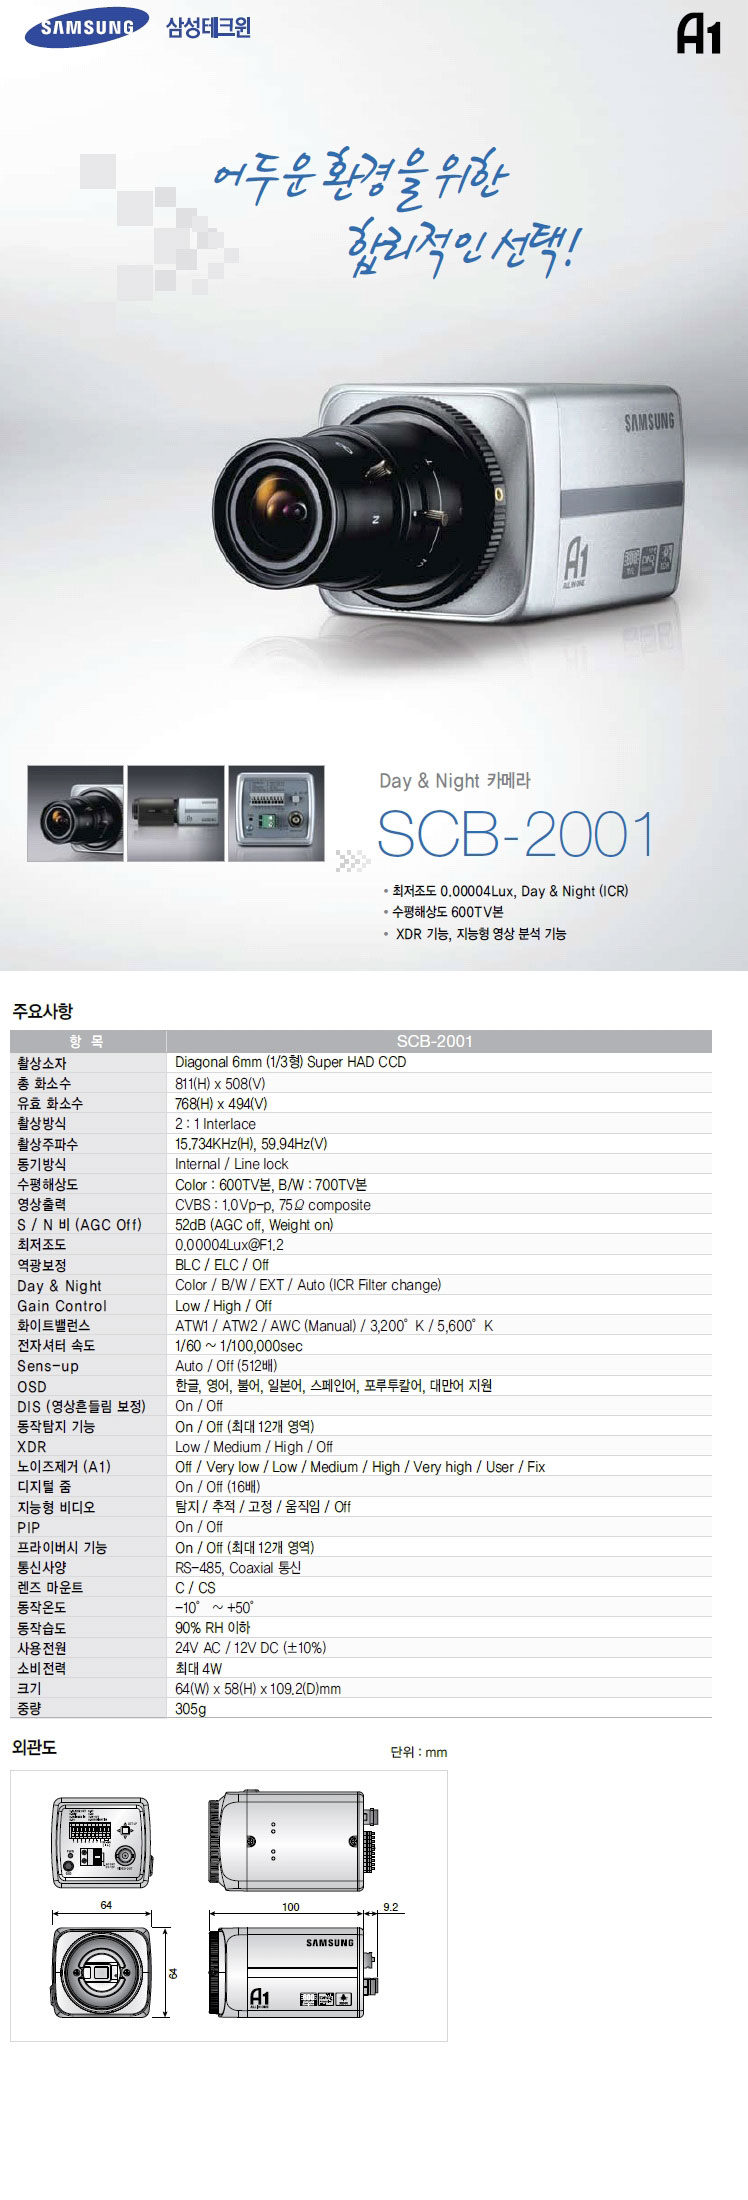 SCB-2001